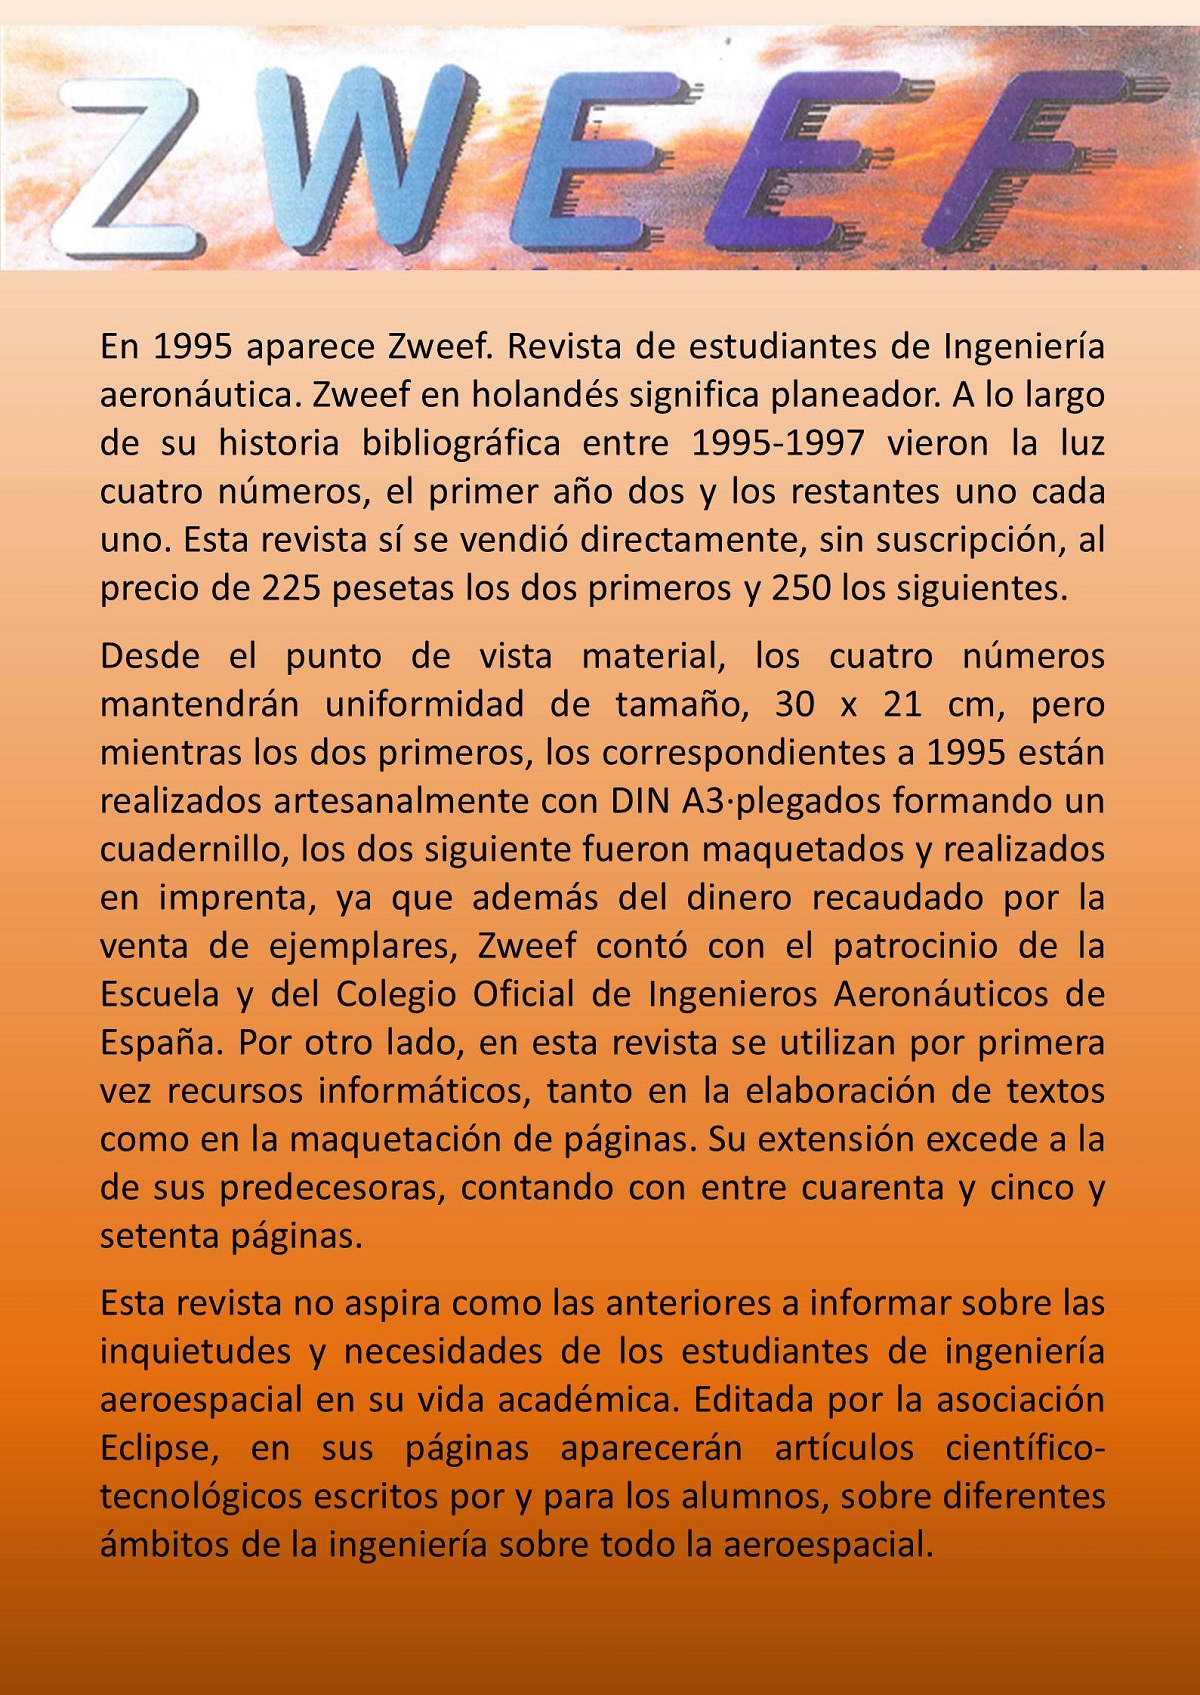 Historia de la Revista Zweef